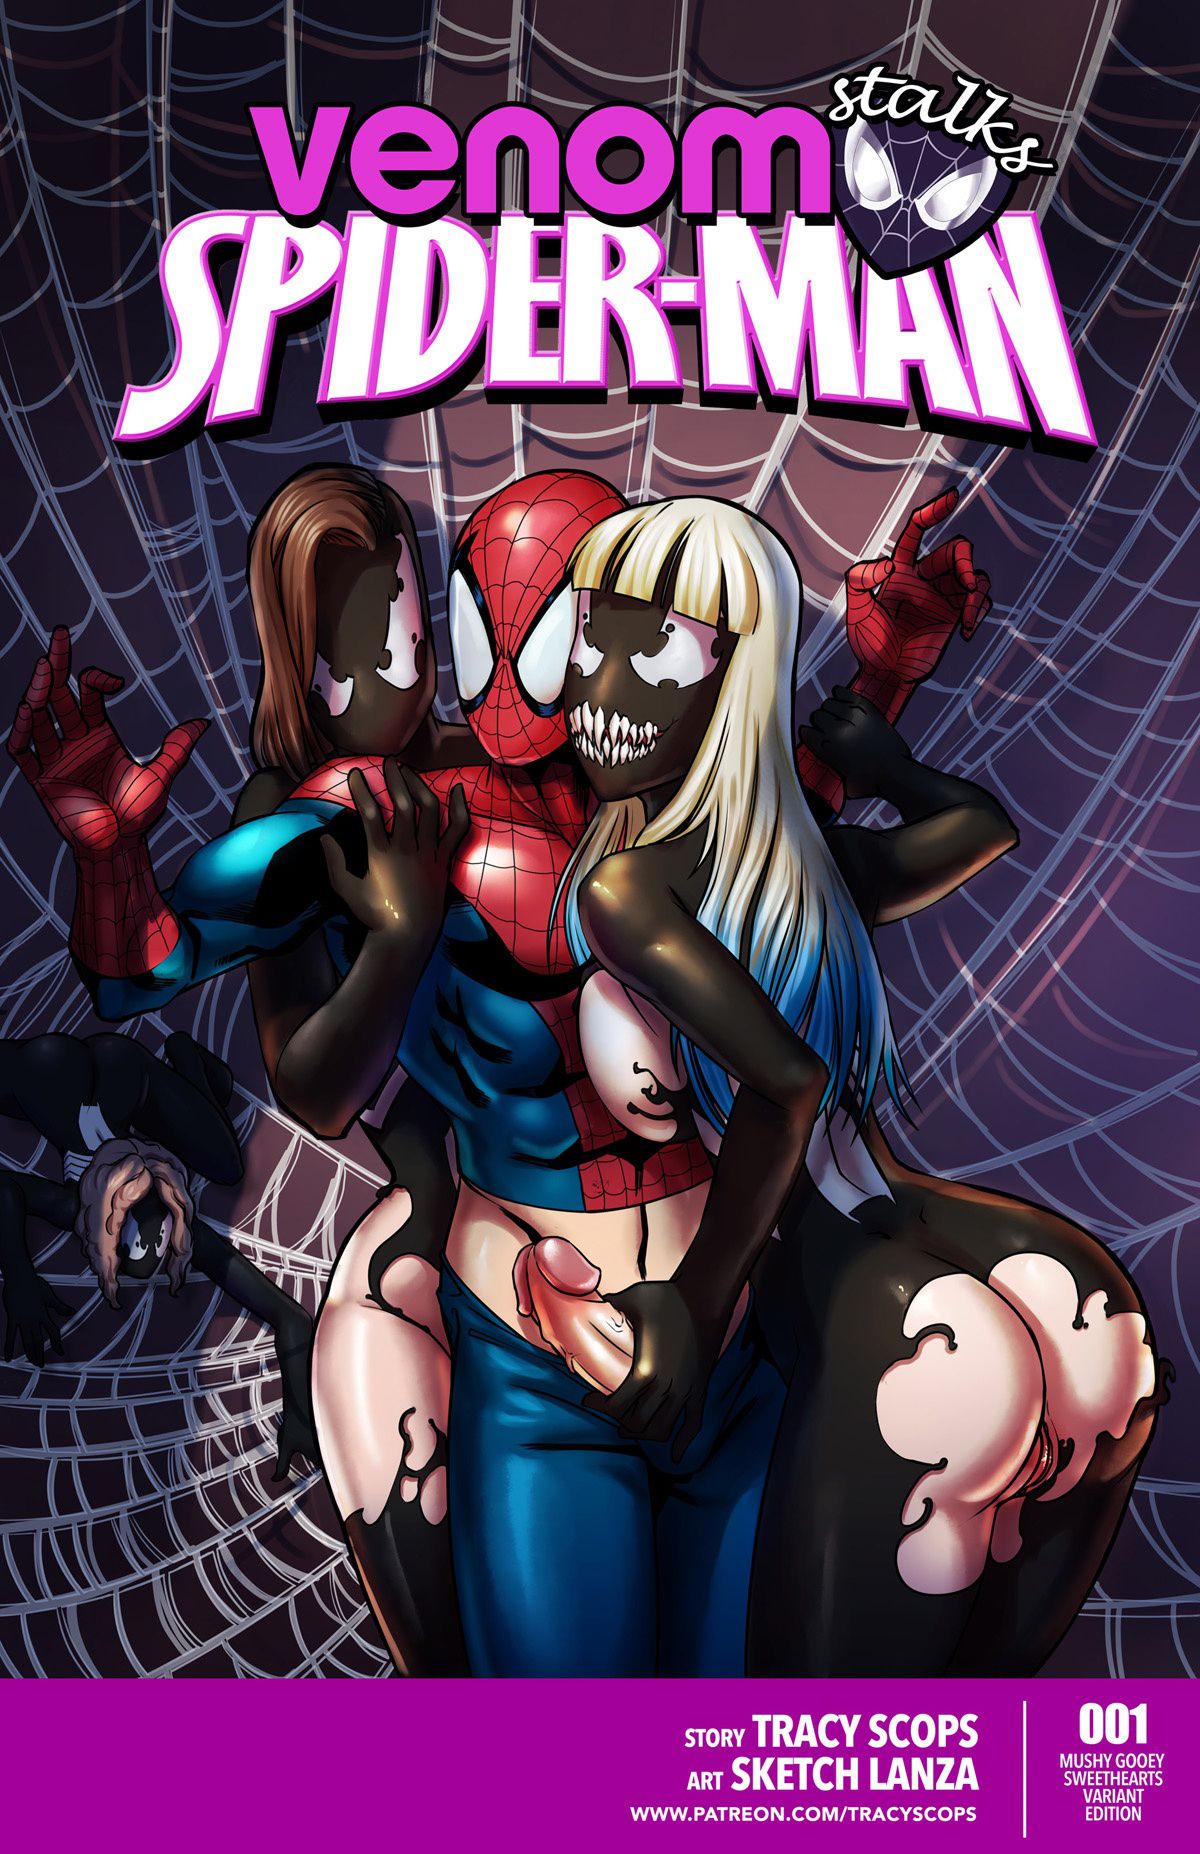 Venom spiderman porn